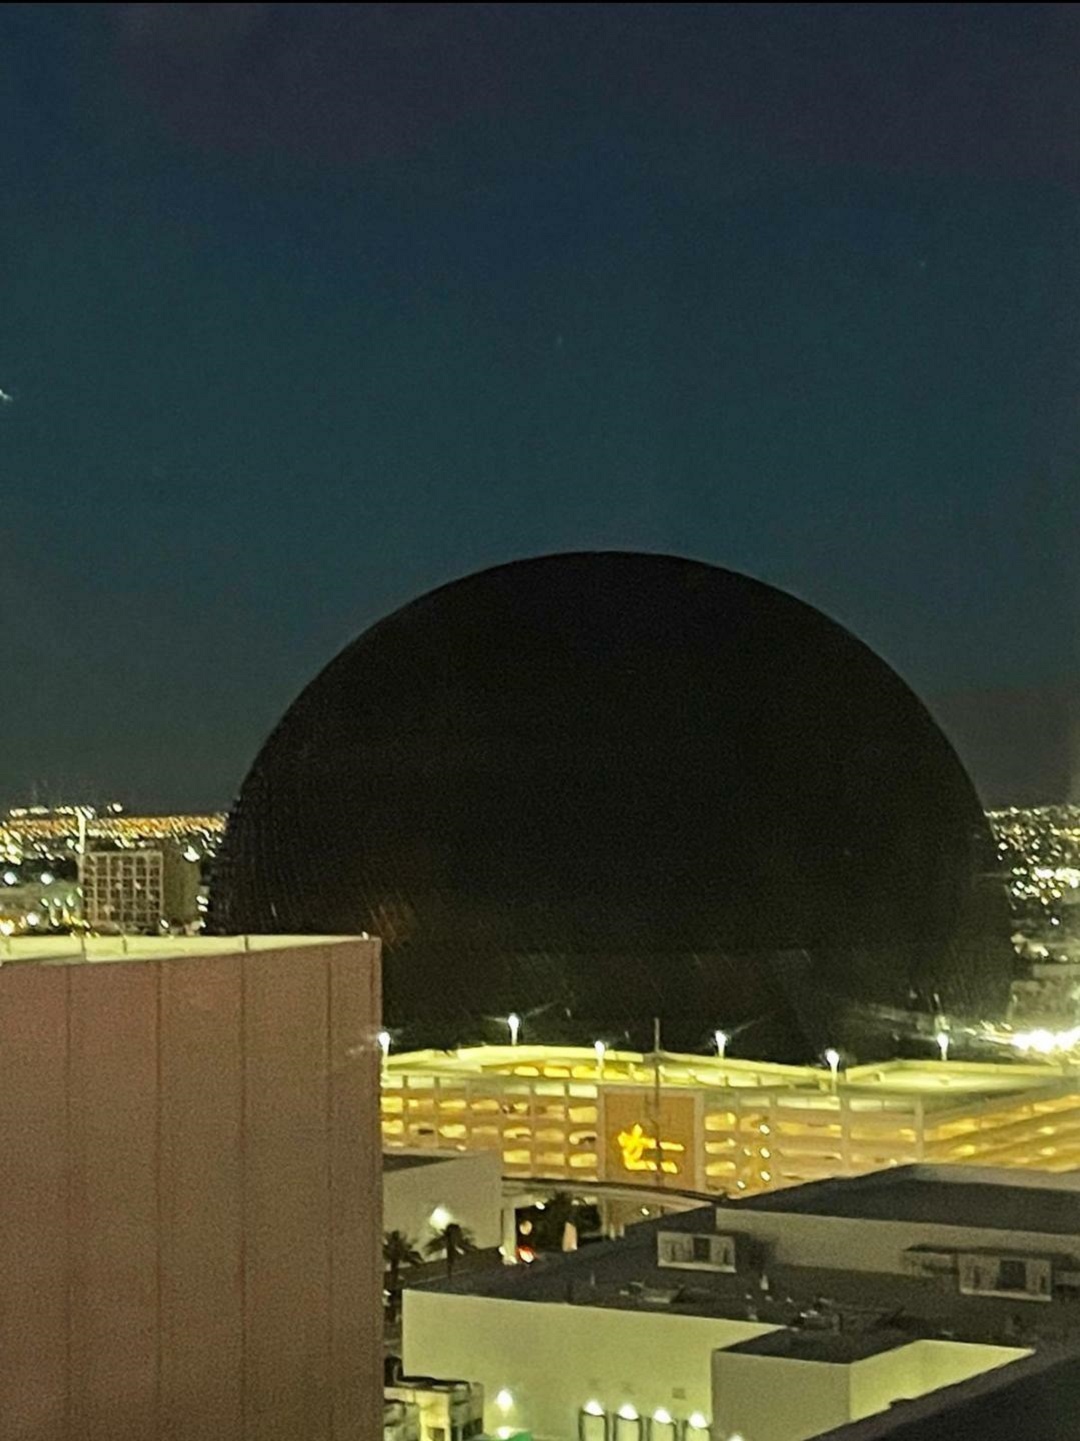 This Giant Sphere In Las Vegas, Nevada